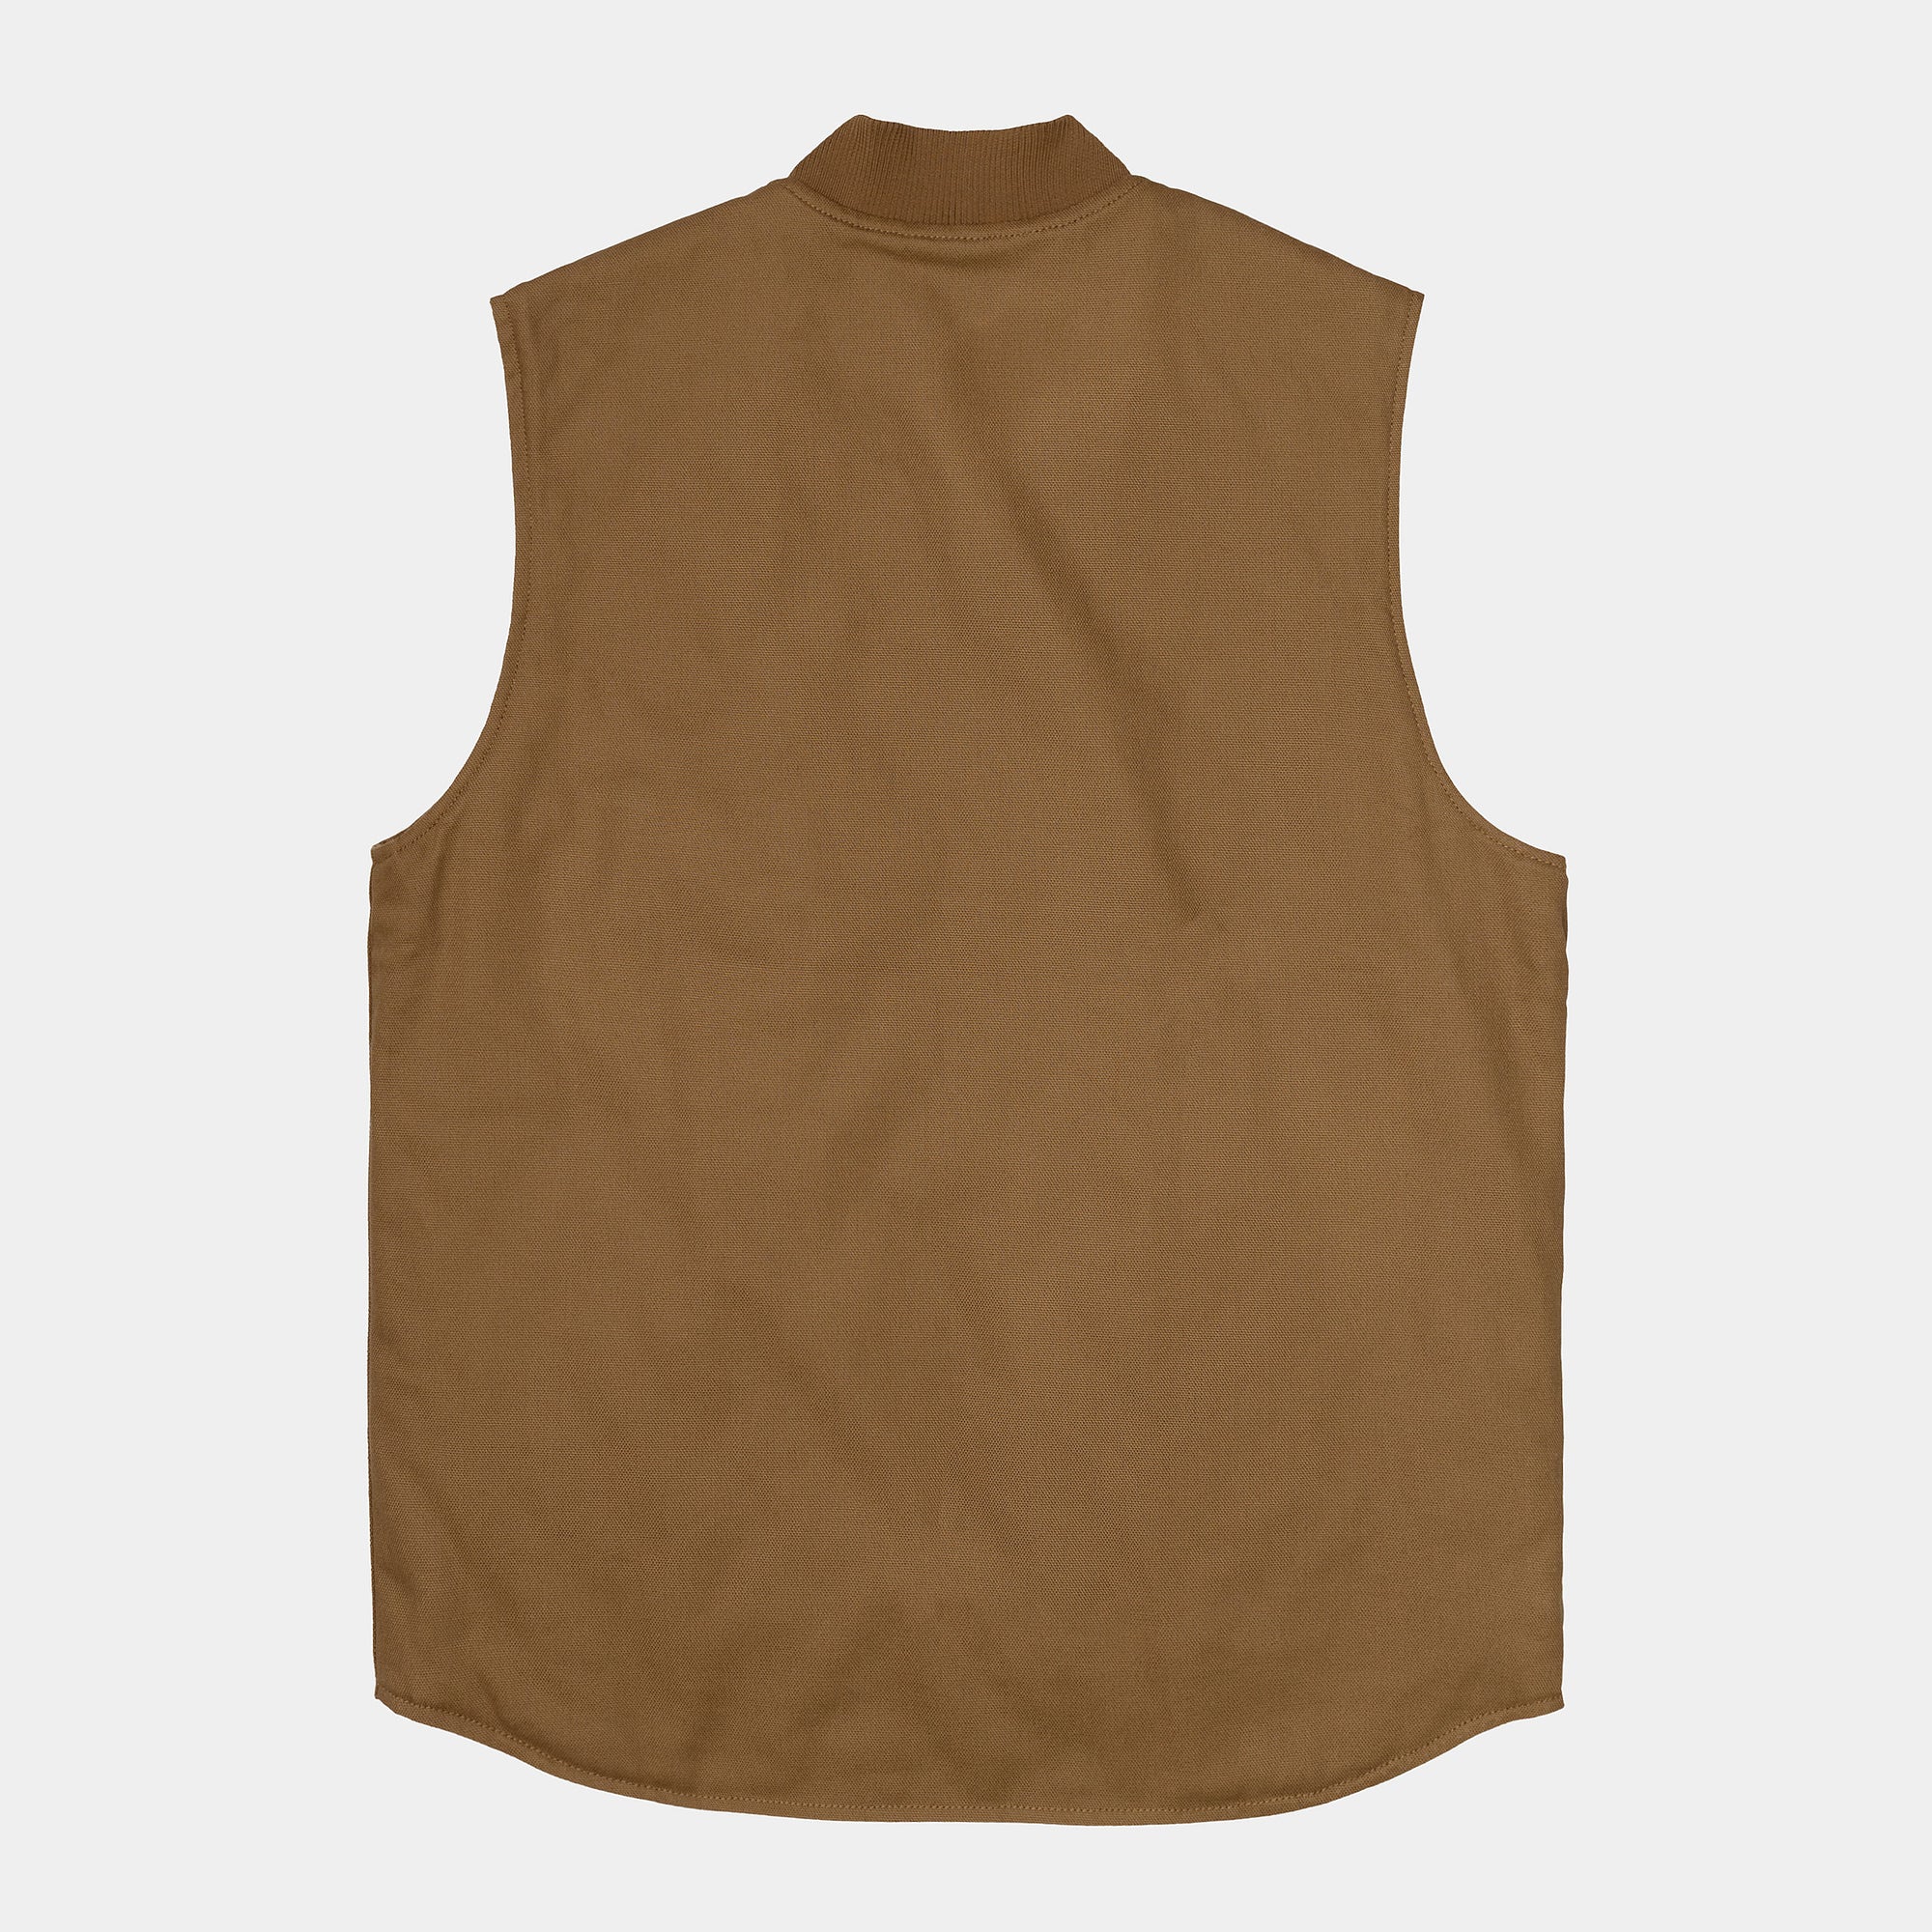 Carhartt WIP - Vest Jacket - Hamilton Brown (Rigid)